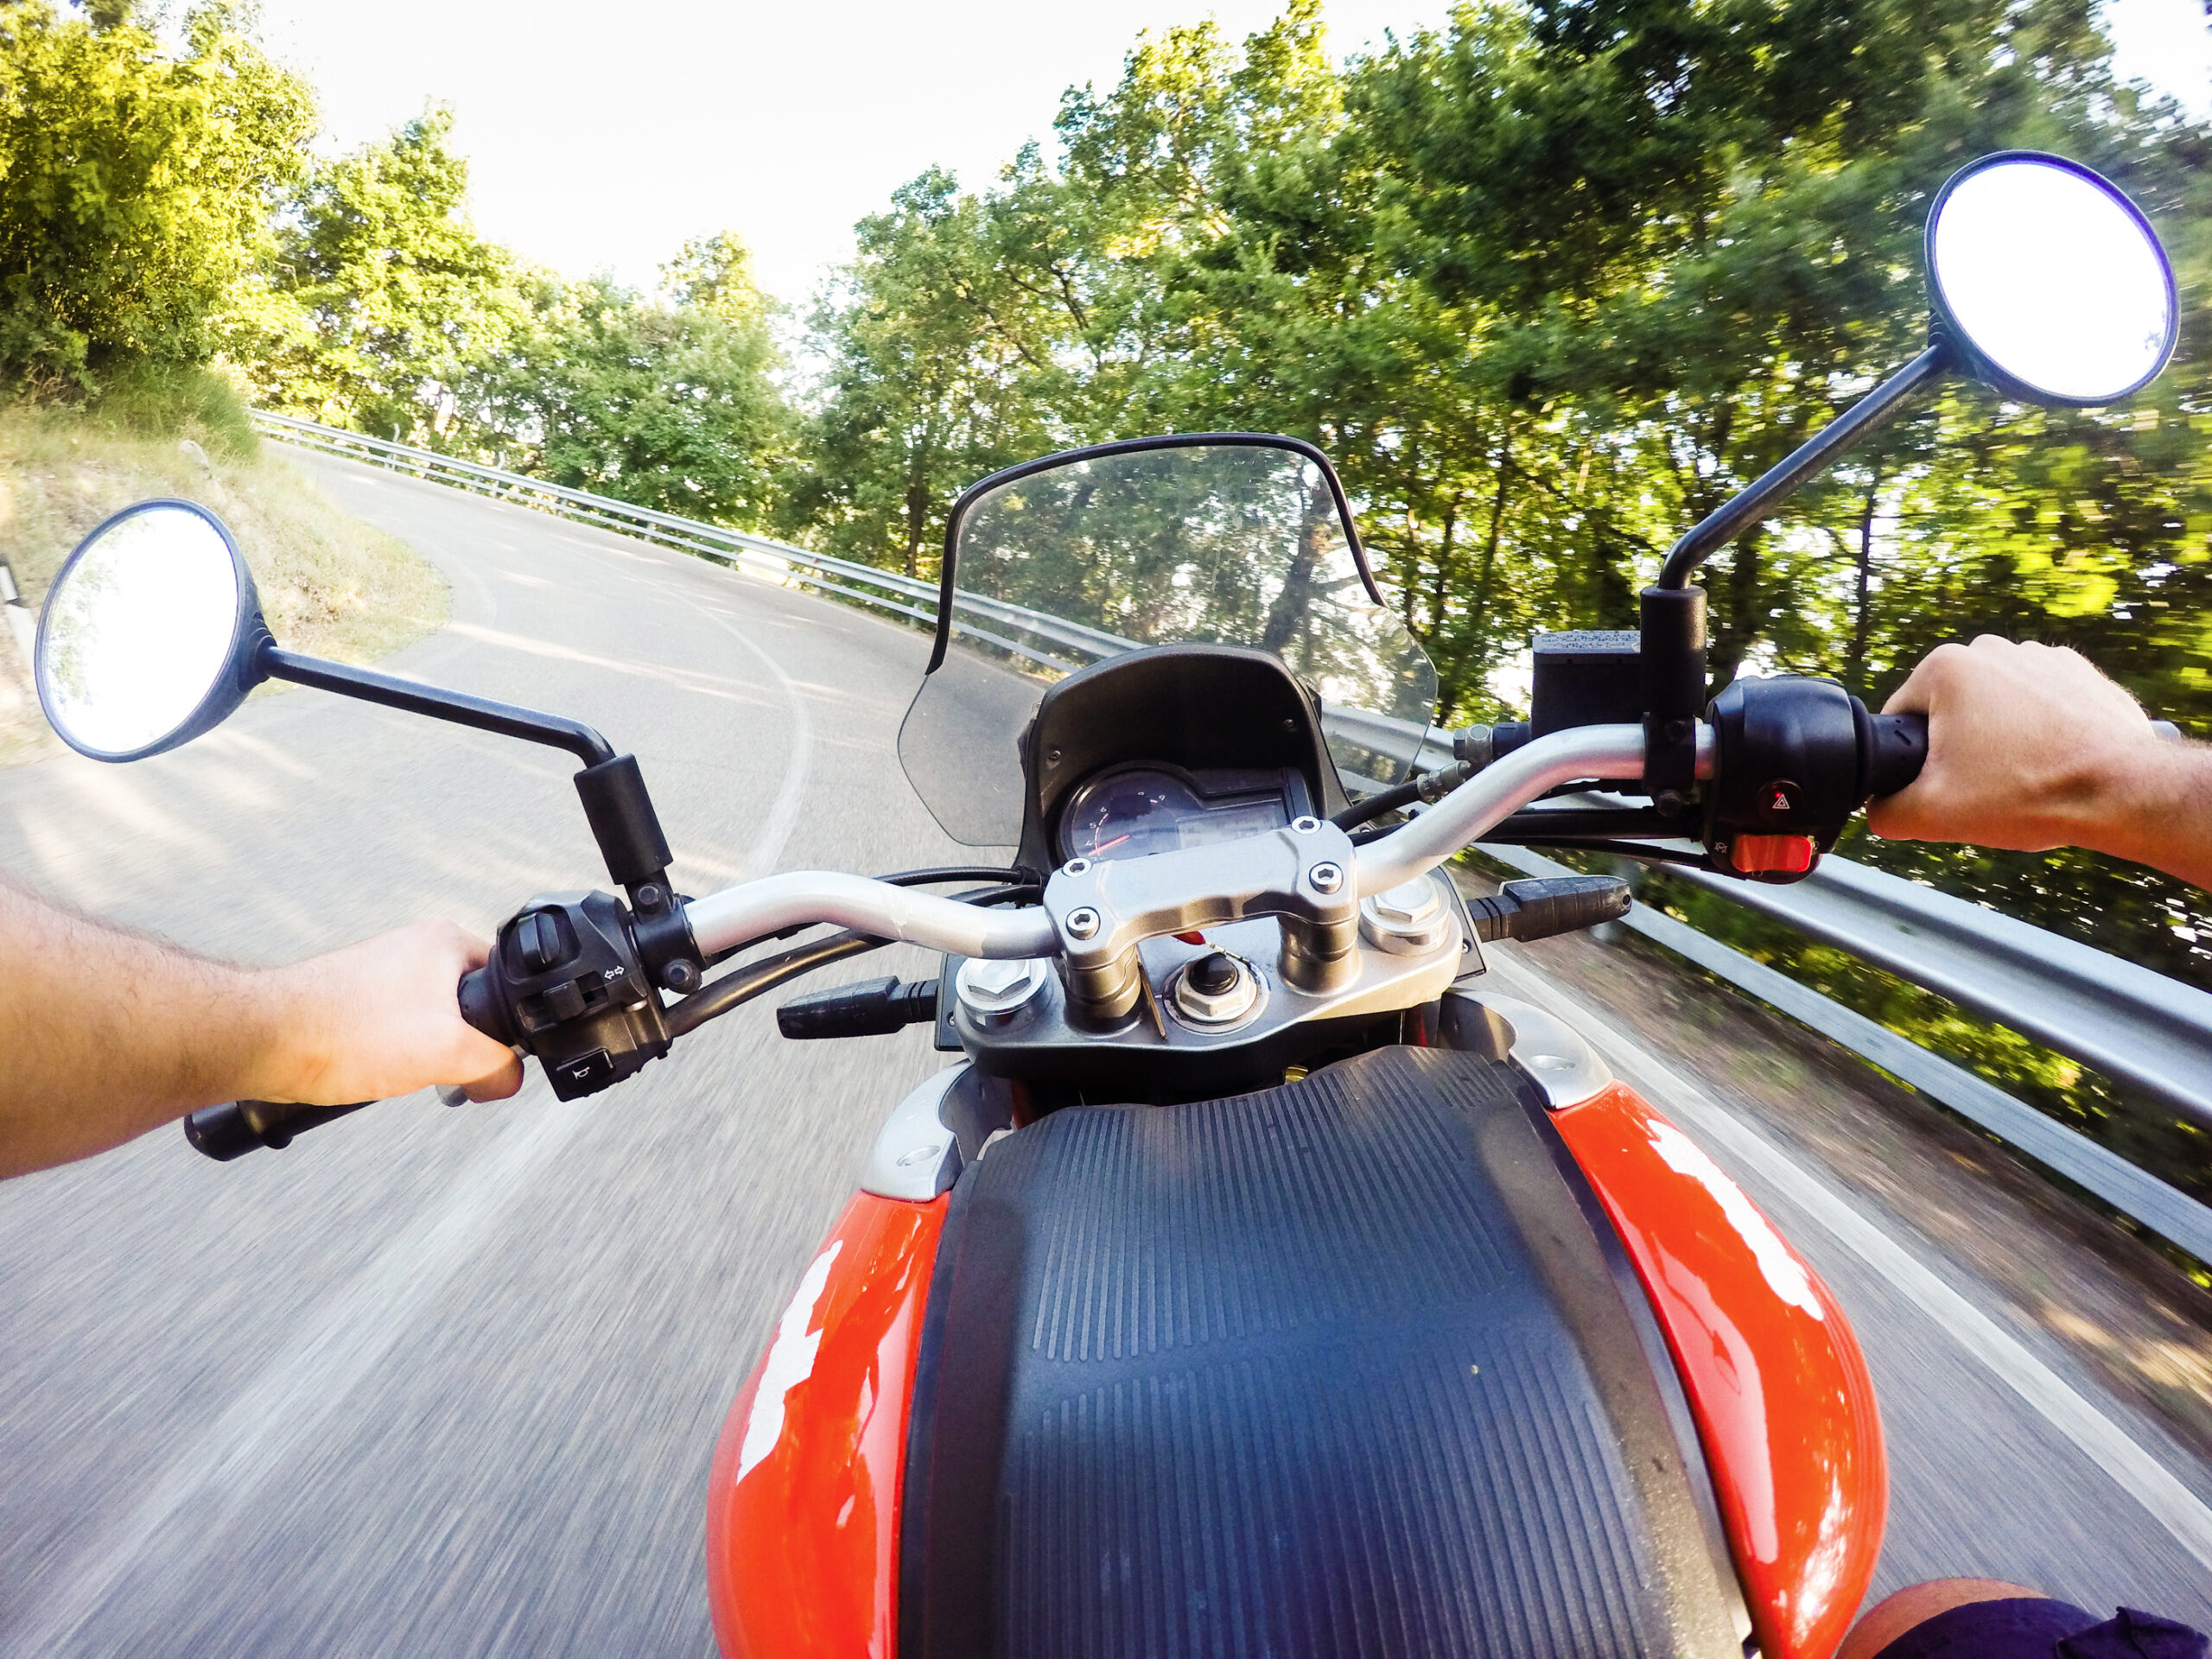 Soporte de espejo retrovisor para motos de cámara Gopro